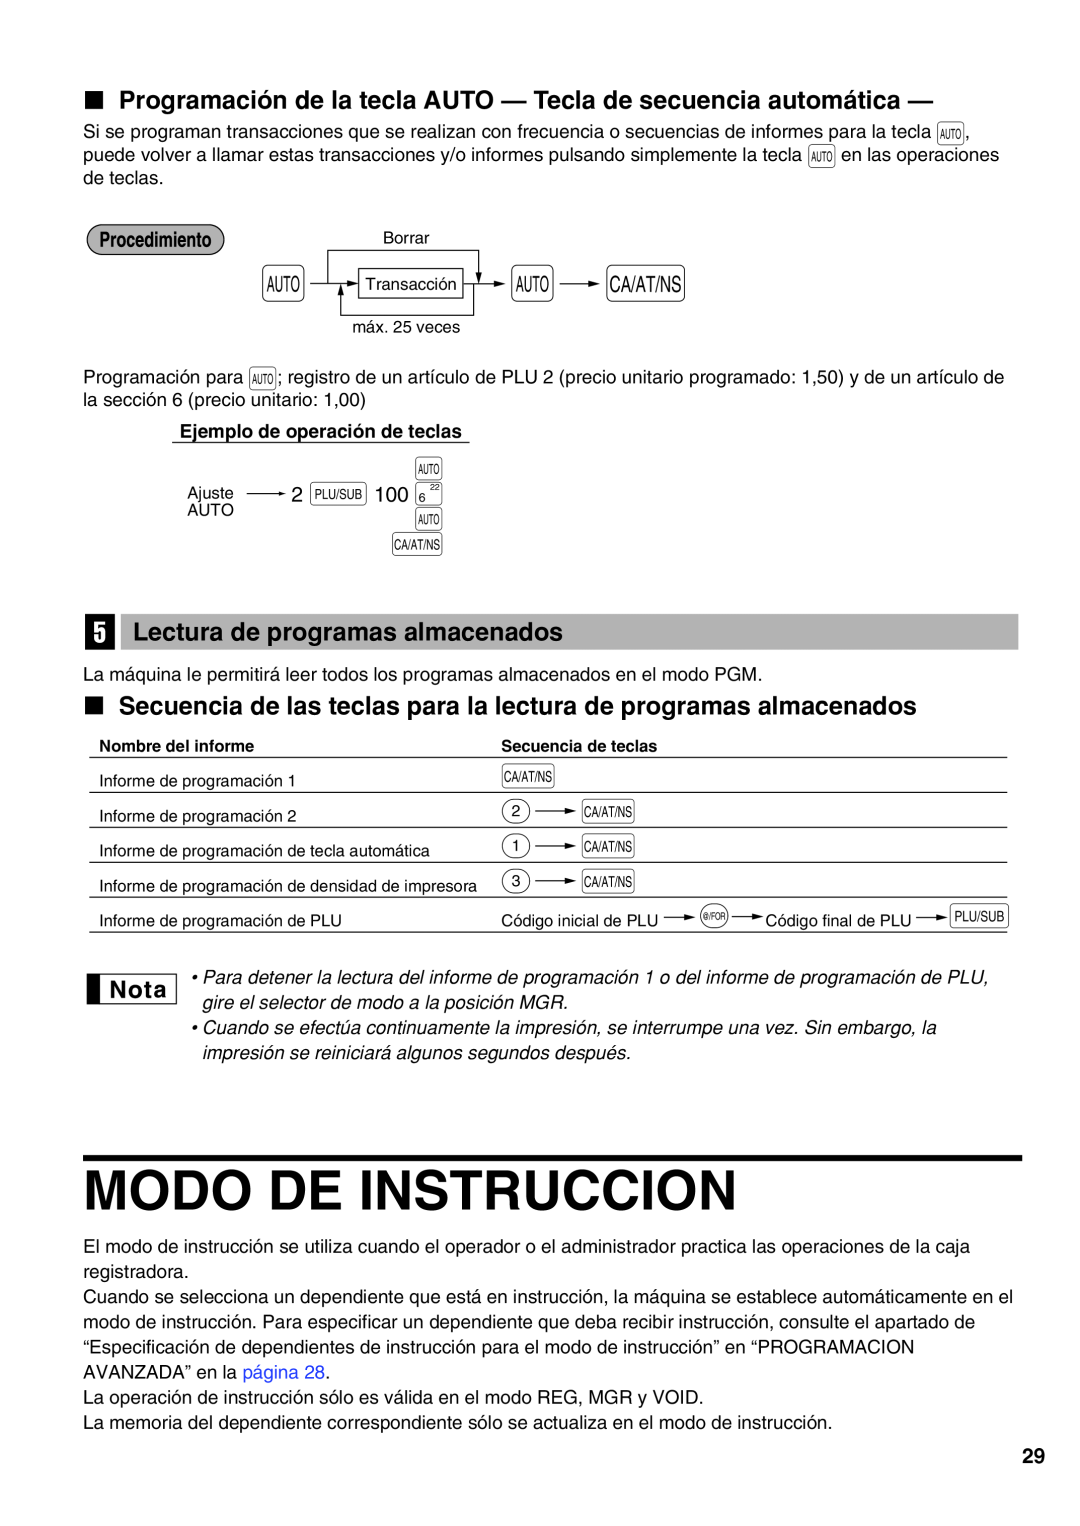 Sharp XE-A21S instruction manual Modo De Instruccion, Programación de la tecla AUTO - Tecla de secuencia automática 